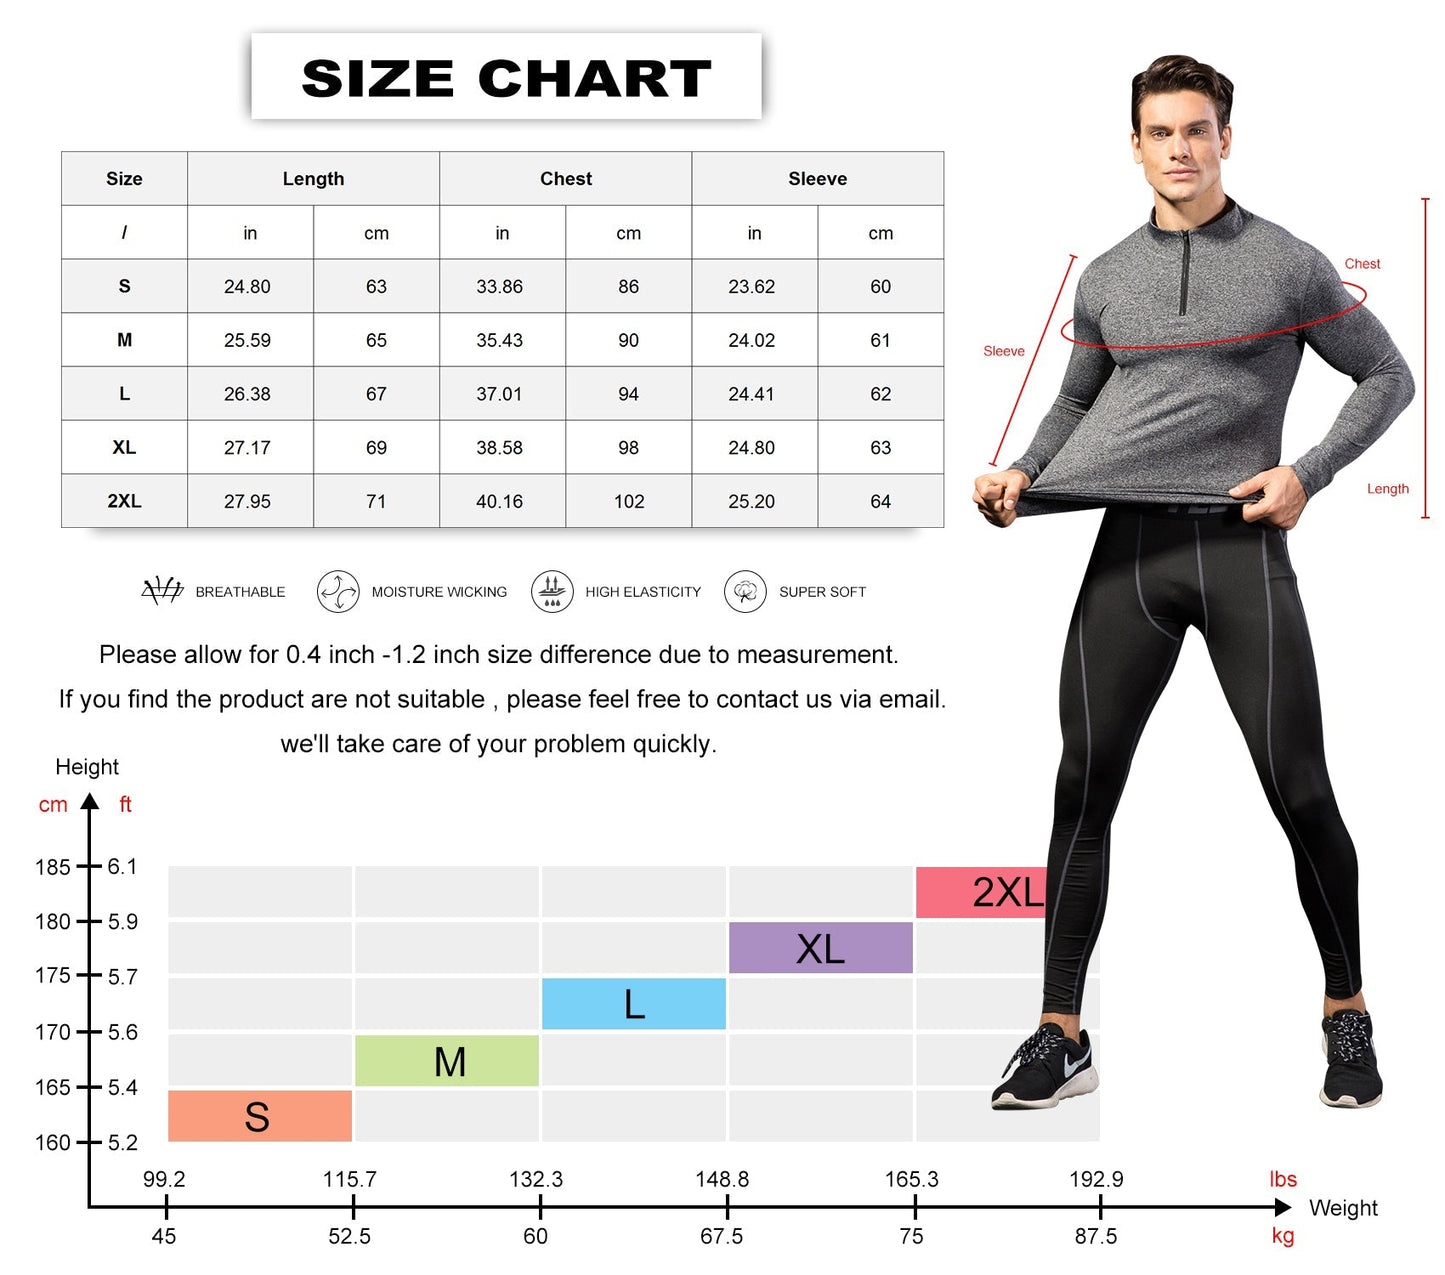 Mens 1/4 Zip Mock Long Sleeve Compression Workout Shirt Thermal Tops LANBAOSI